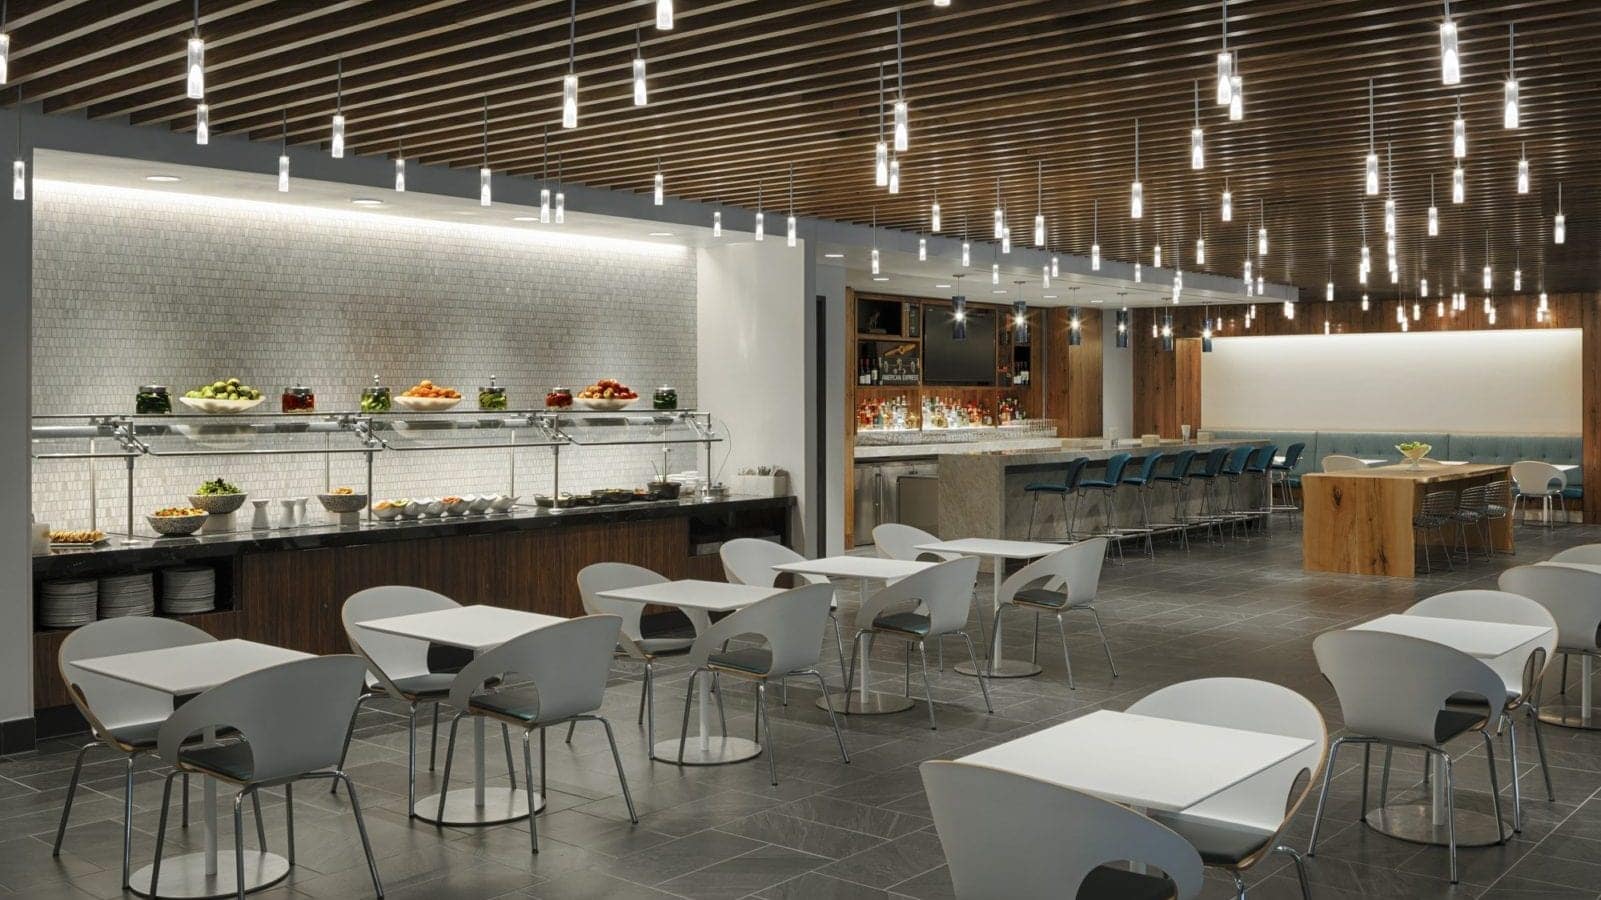 The American Express Centurion Lounge benefits from an abundance of natural light.